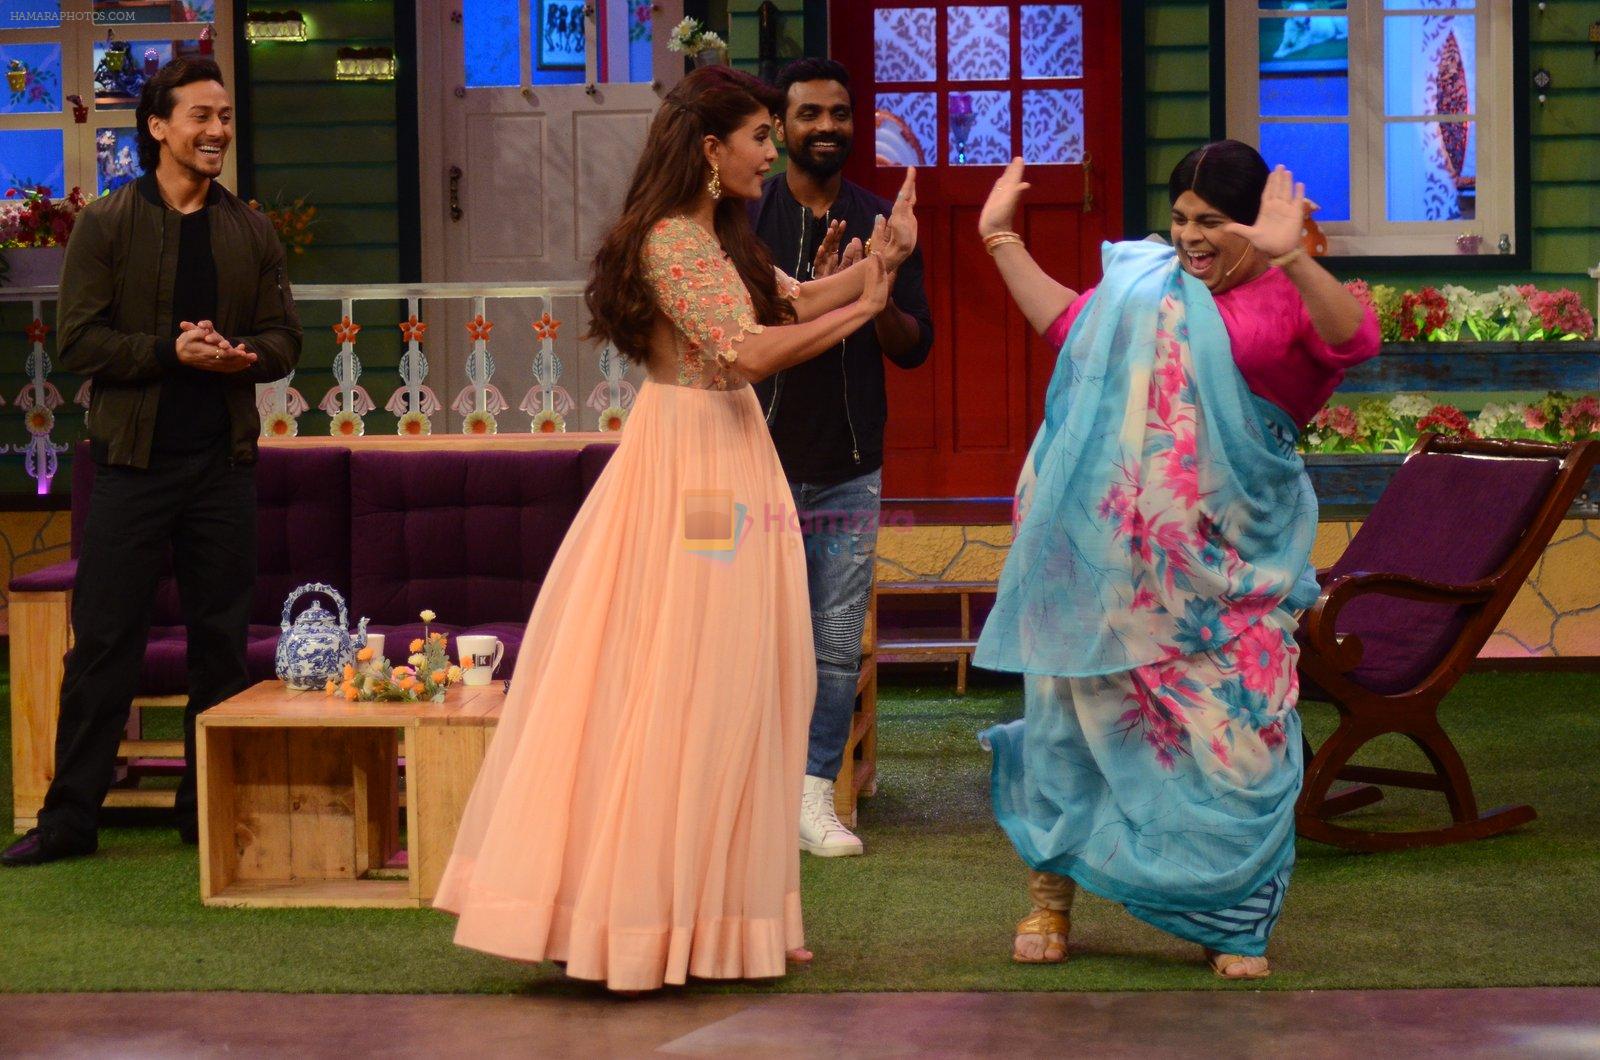 Jacqueline Fernandez promote The Flying Jatt on the sets of The Kapil Sharma Show on 8th Aug 2016